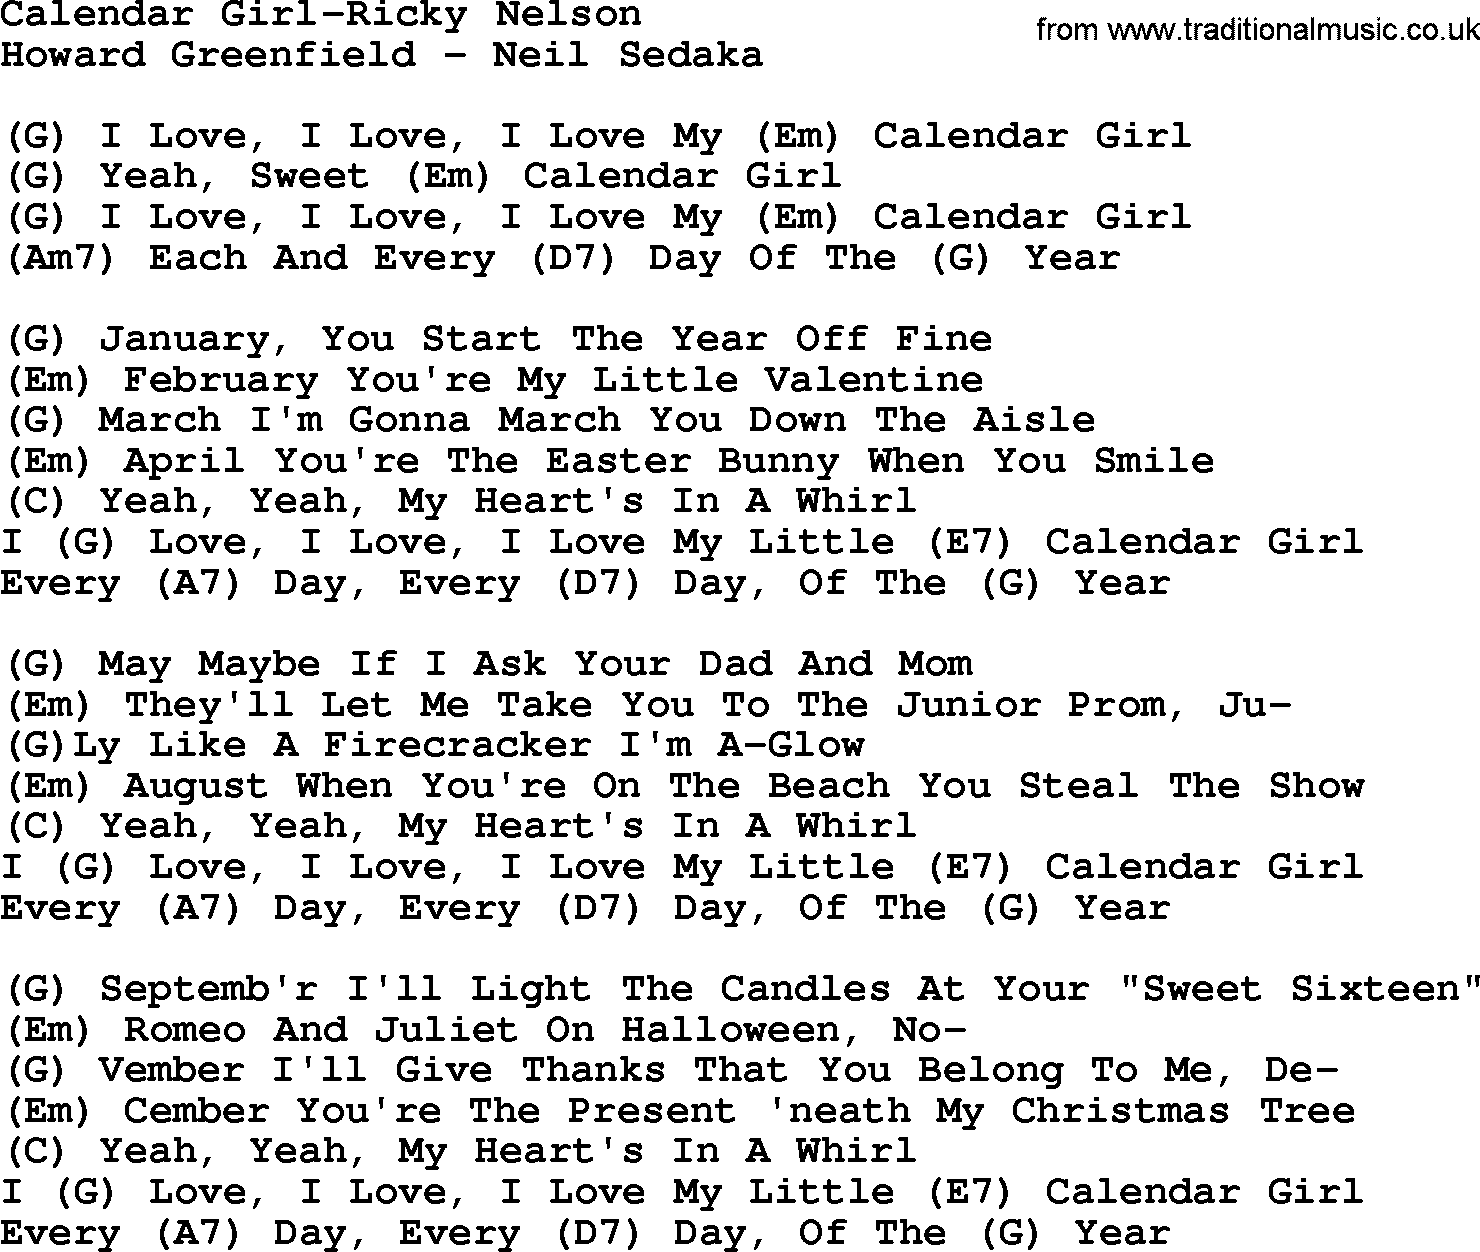 Country music song: Calendar Girl-Ricky Nelson lyrics and chords